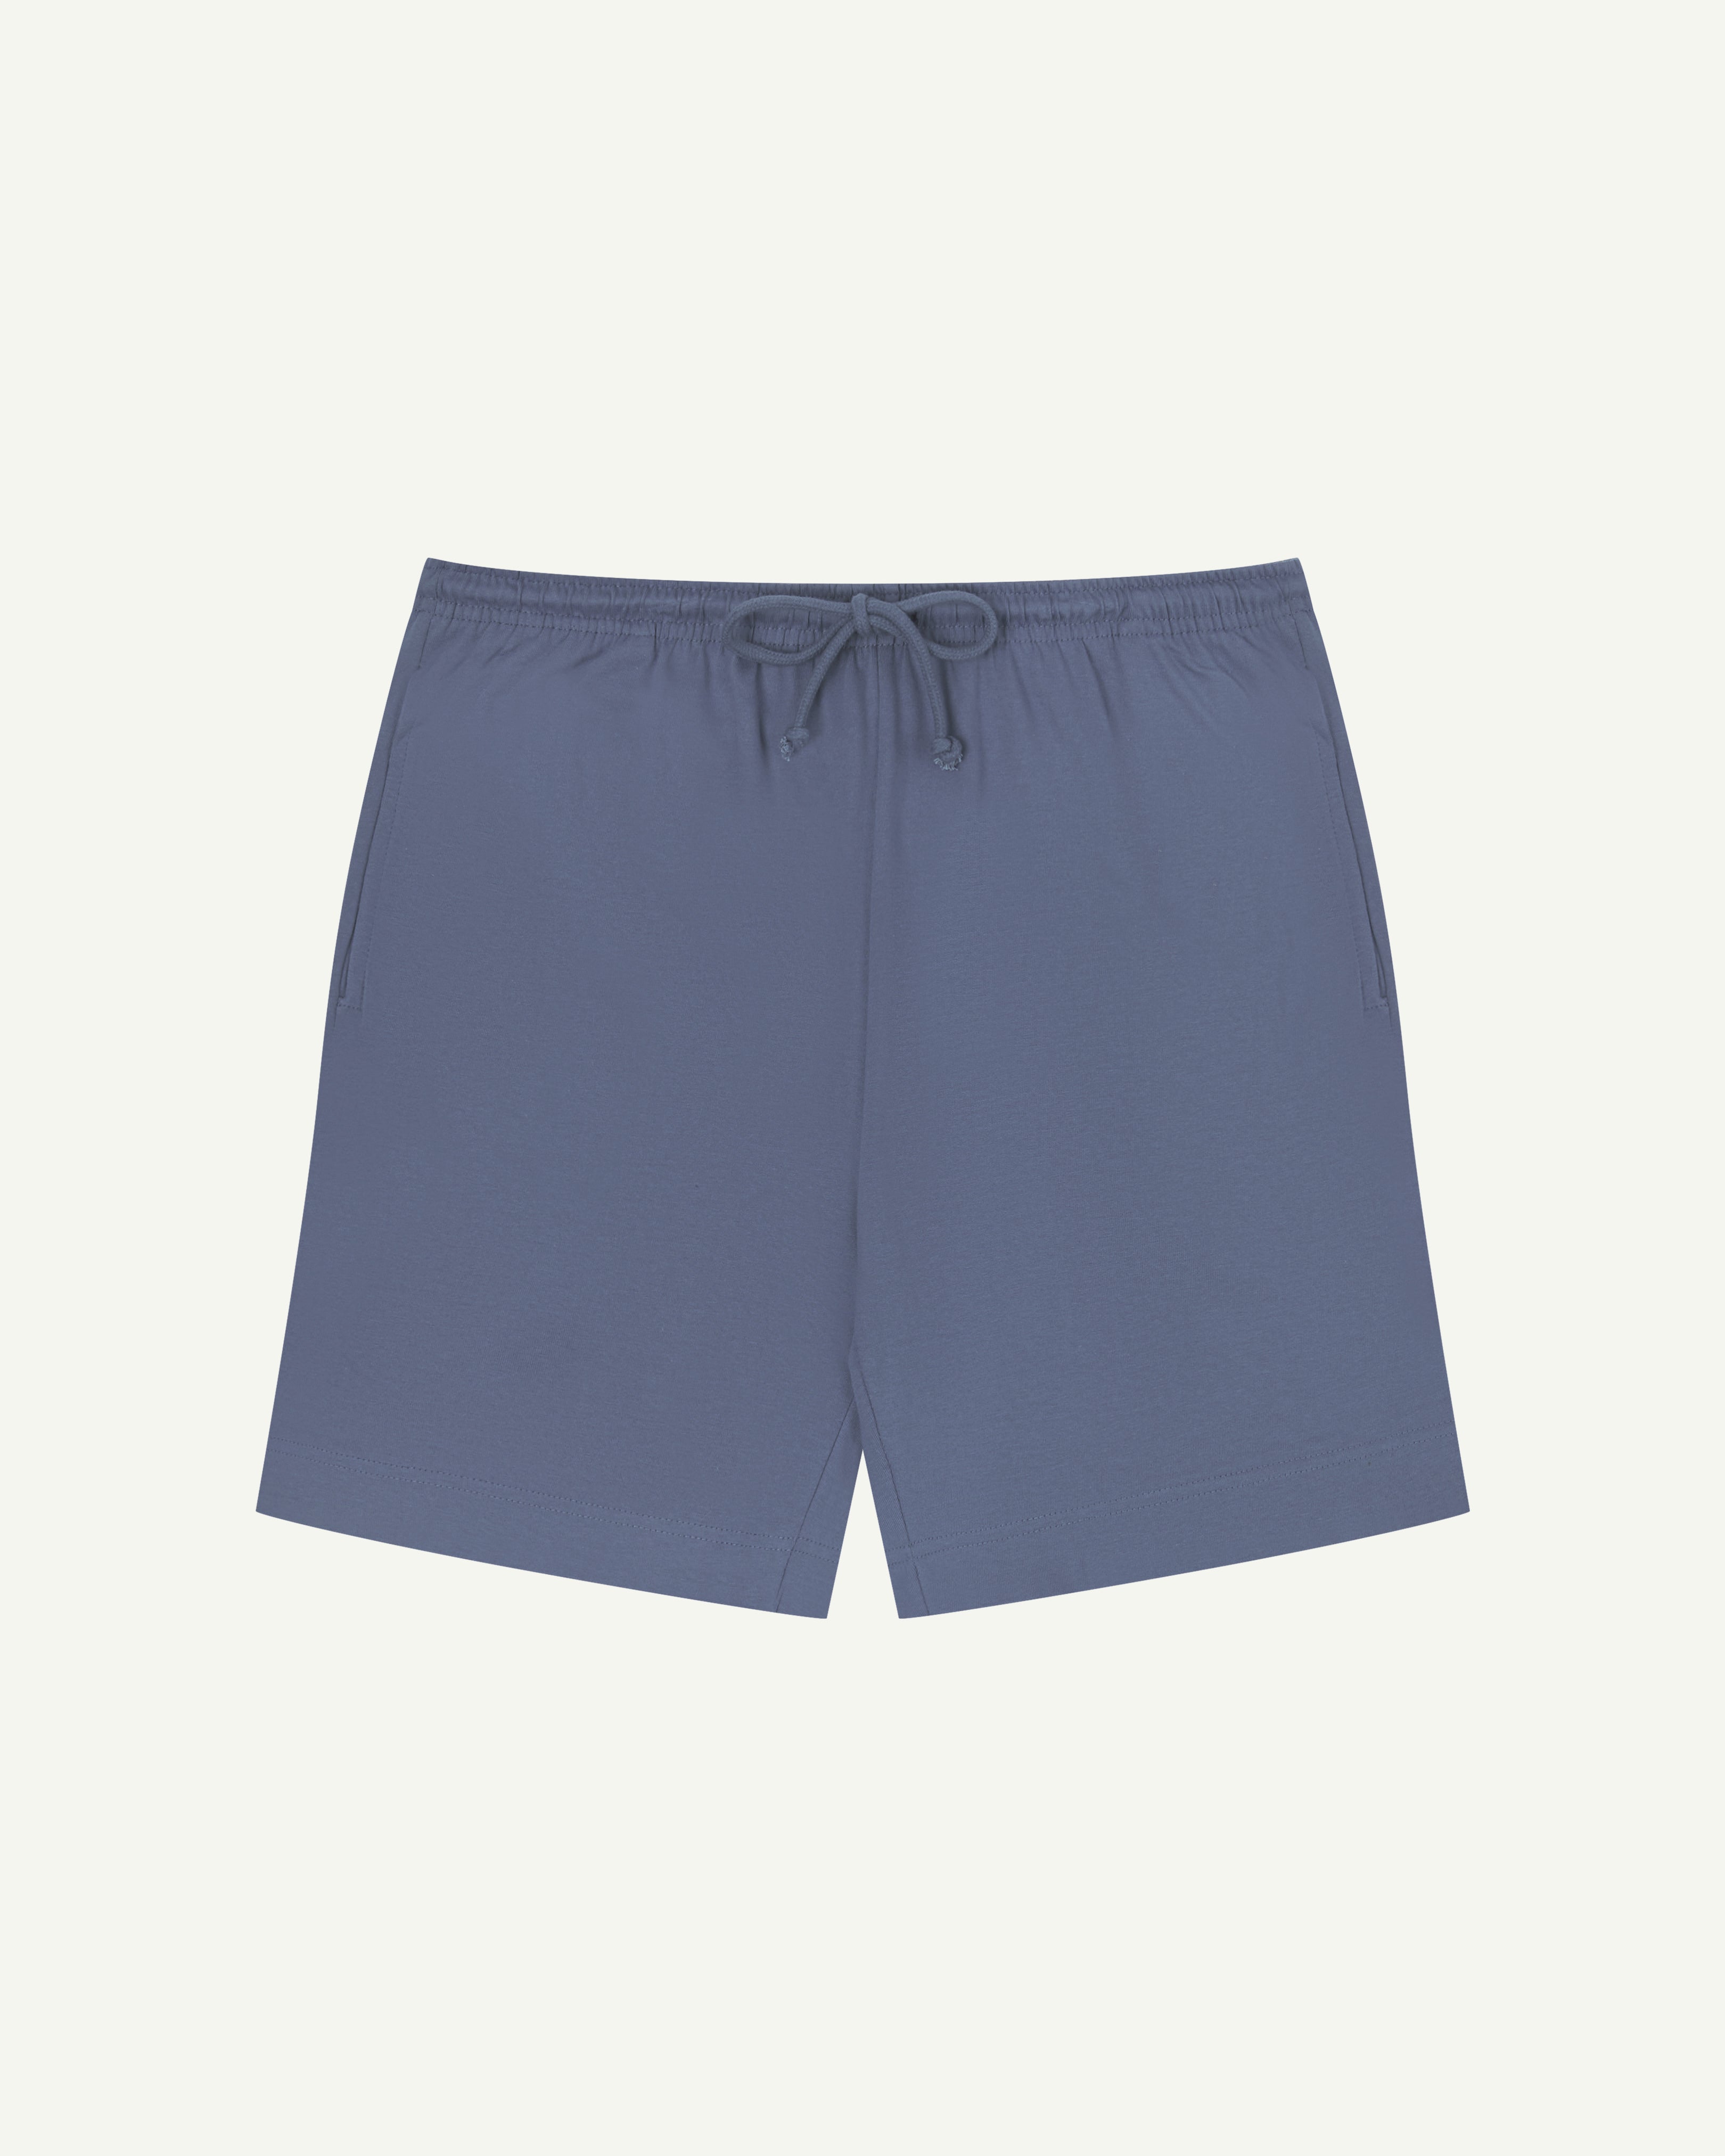 7007 Ultra Blue Men's Drawstring Shorts